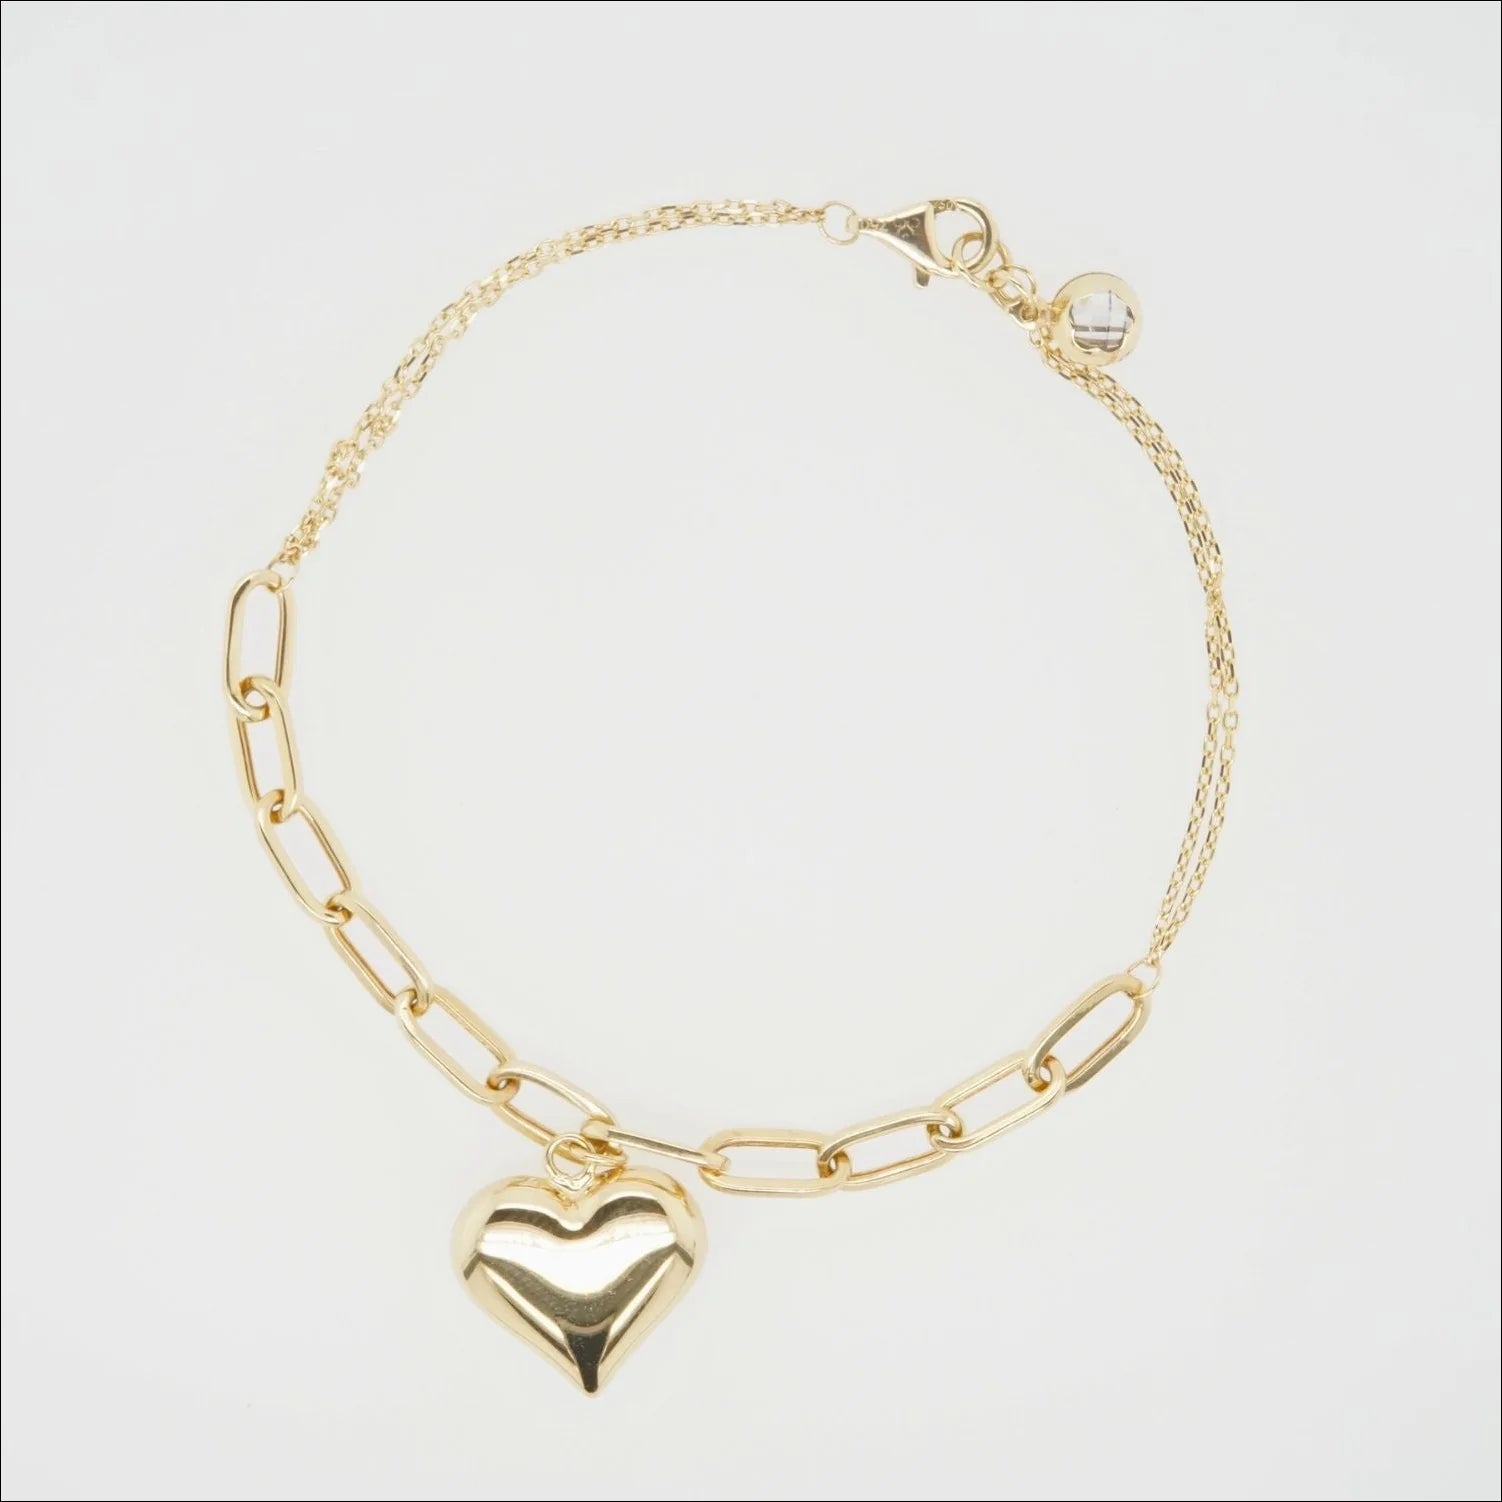 Art Gold Jewelry’s Heart Bracelet: A Symbol of Love